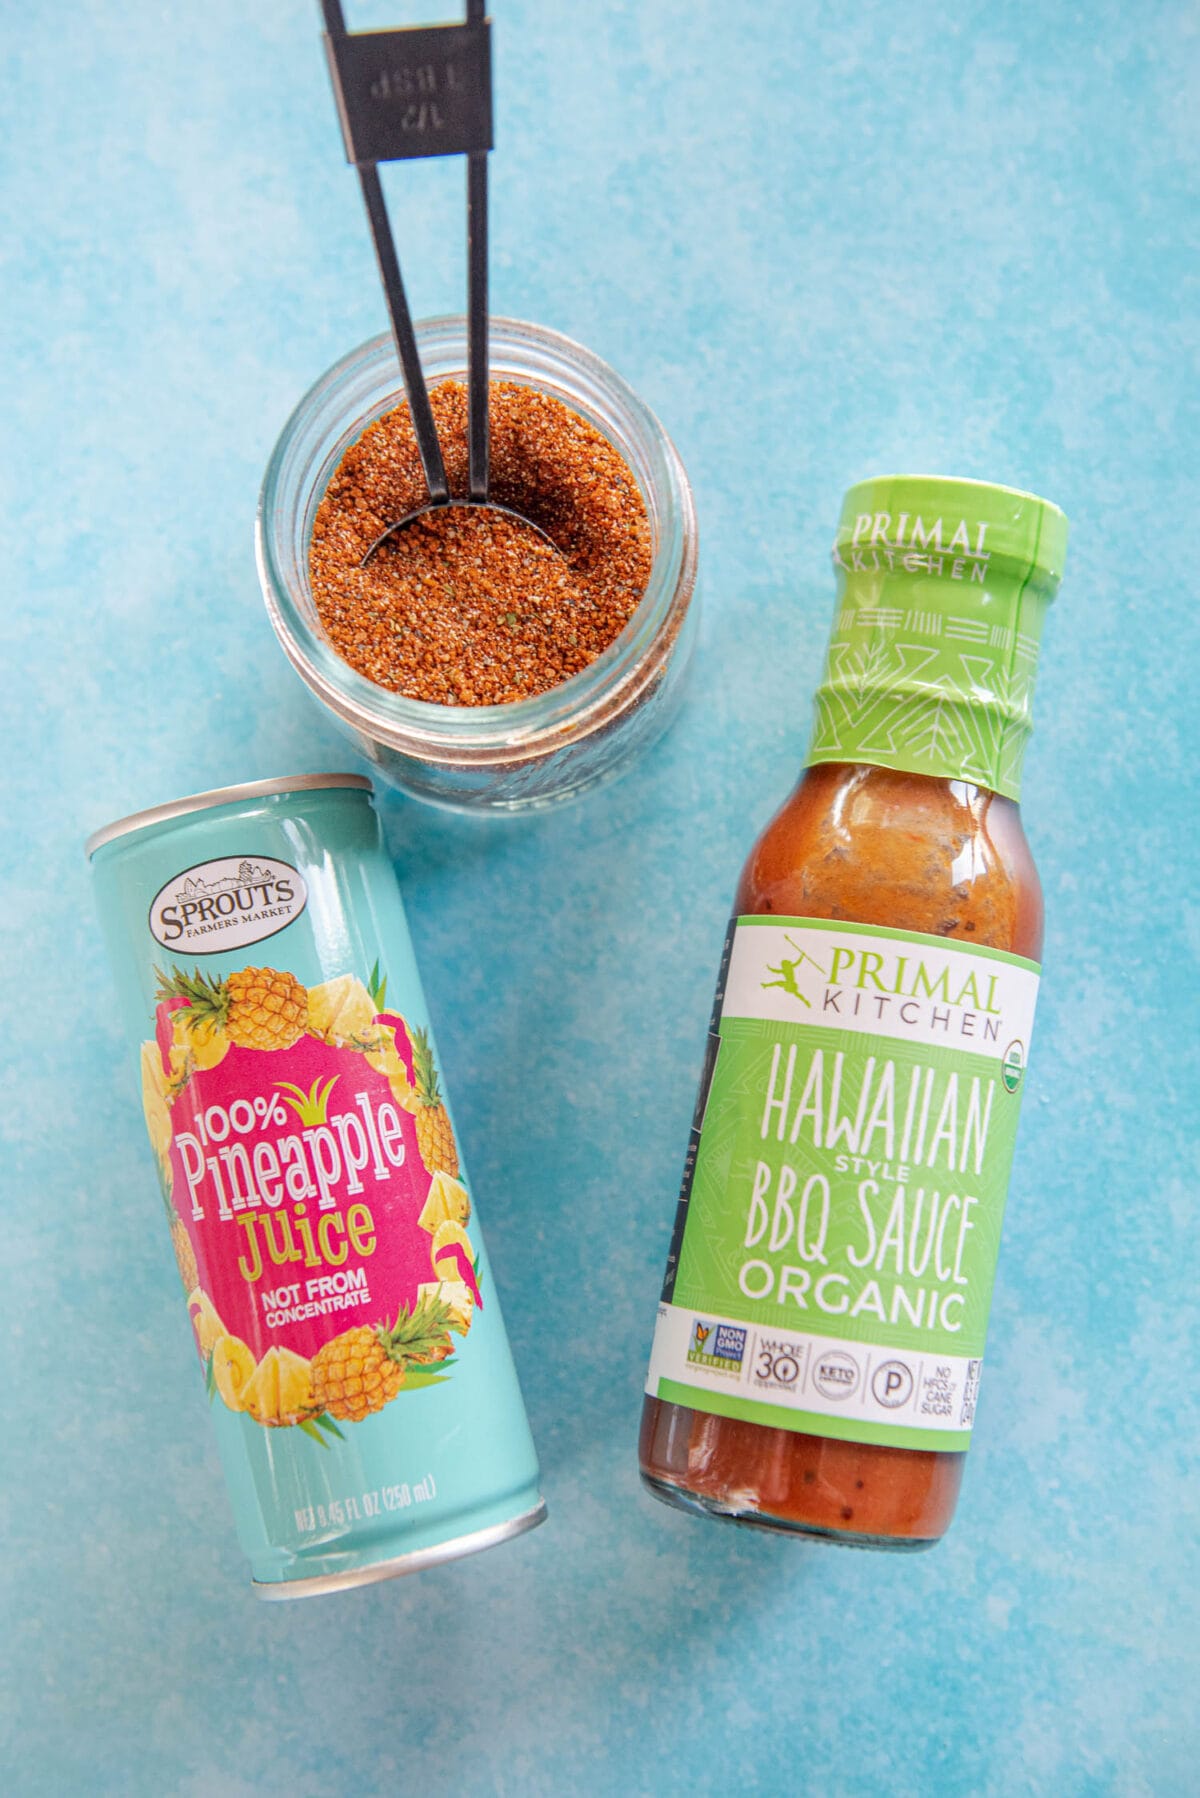 pineapple juice can, seasoning in a jar and bottle of Hawaiian bbq sauce